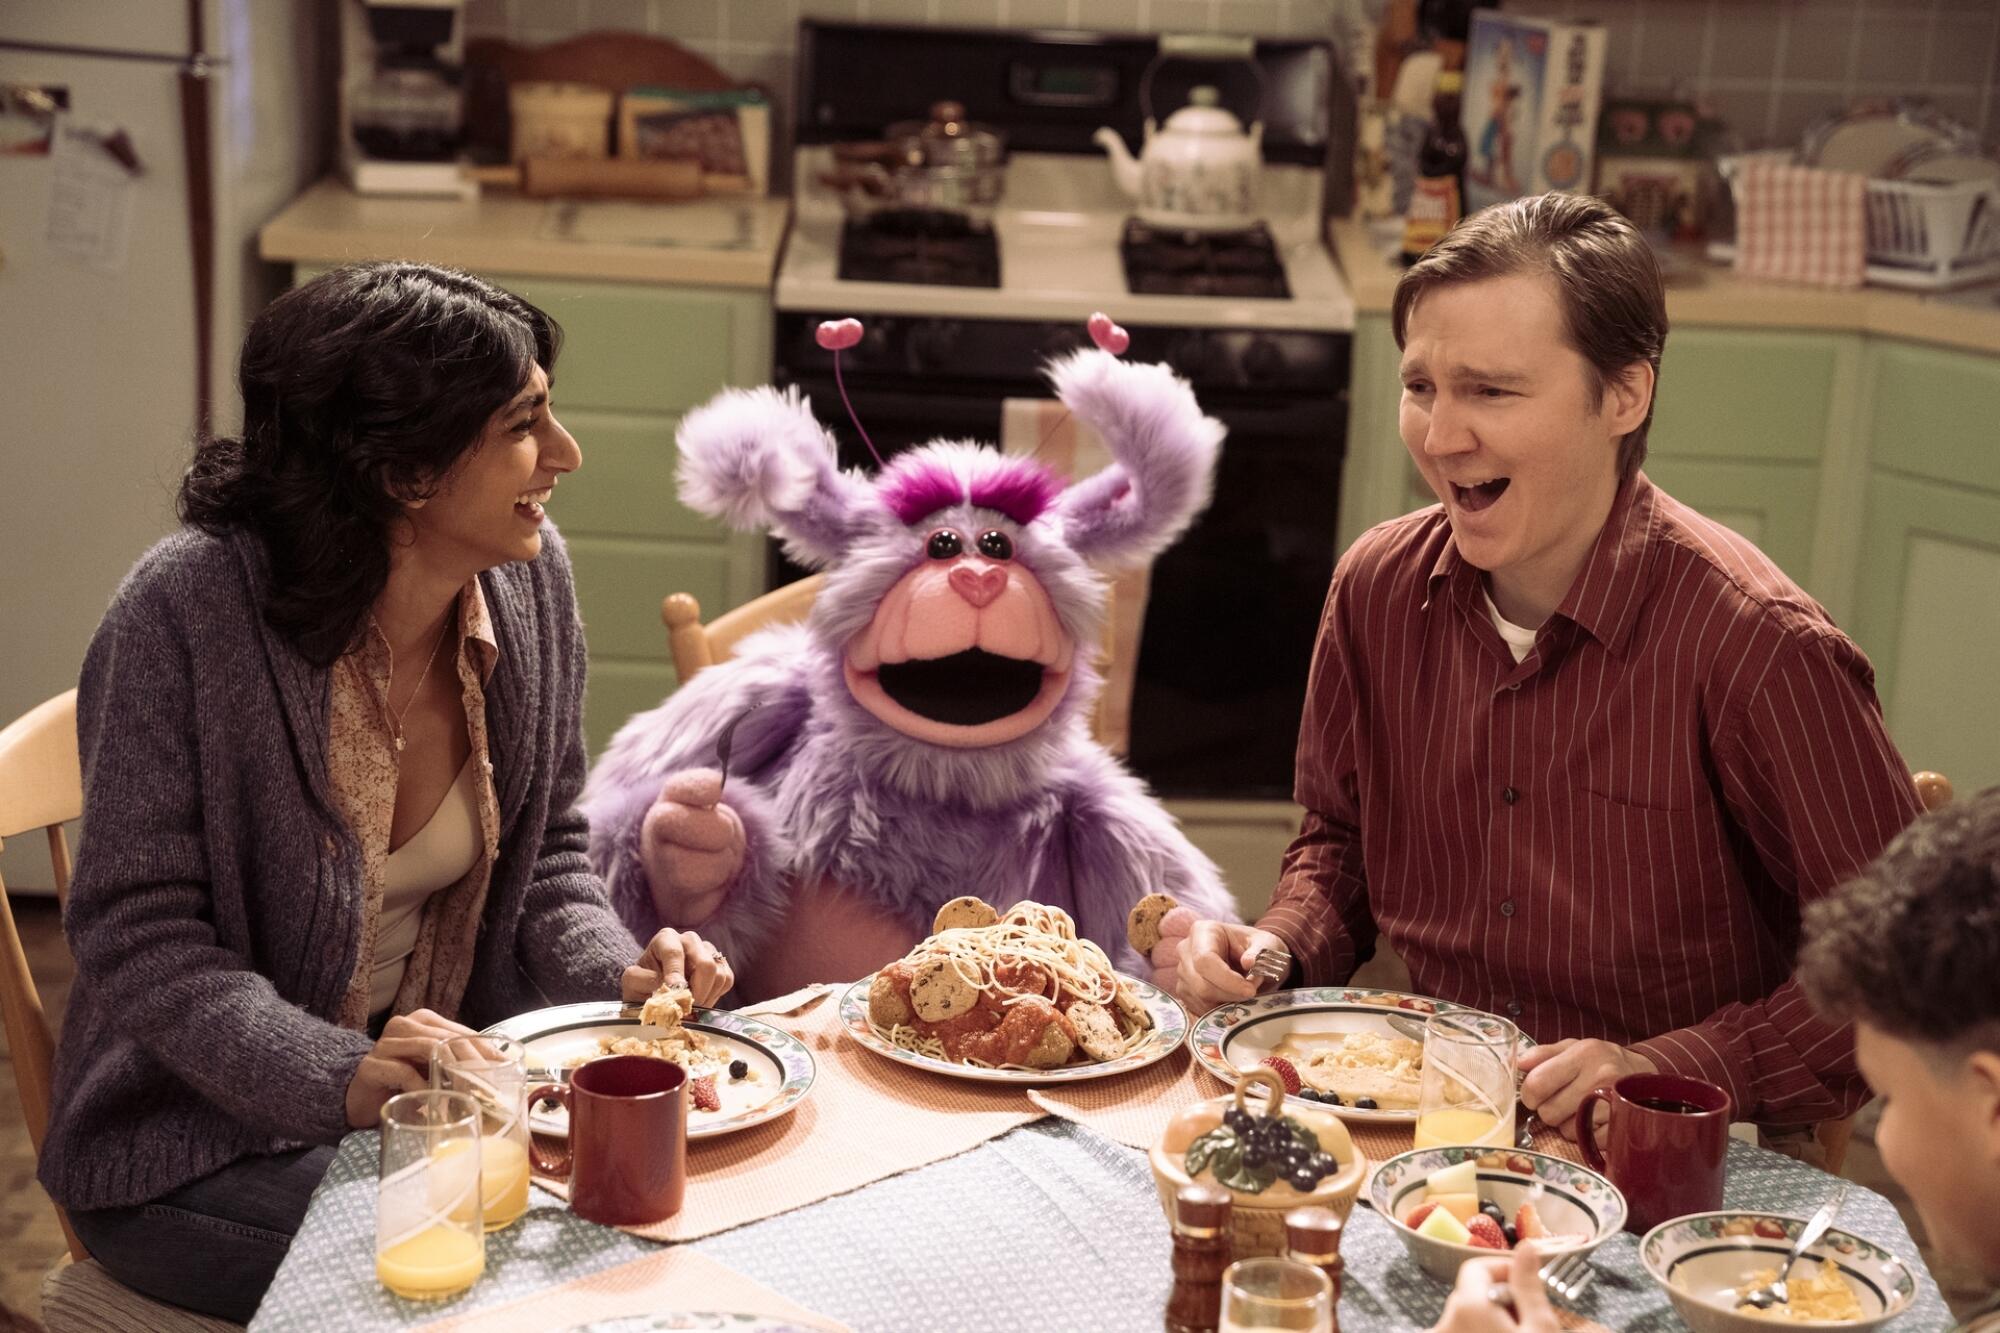 Paul Dano guest stars in "Fantasmas" as a man with feelings for an 'Alf'-like muppet